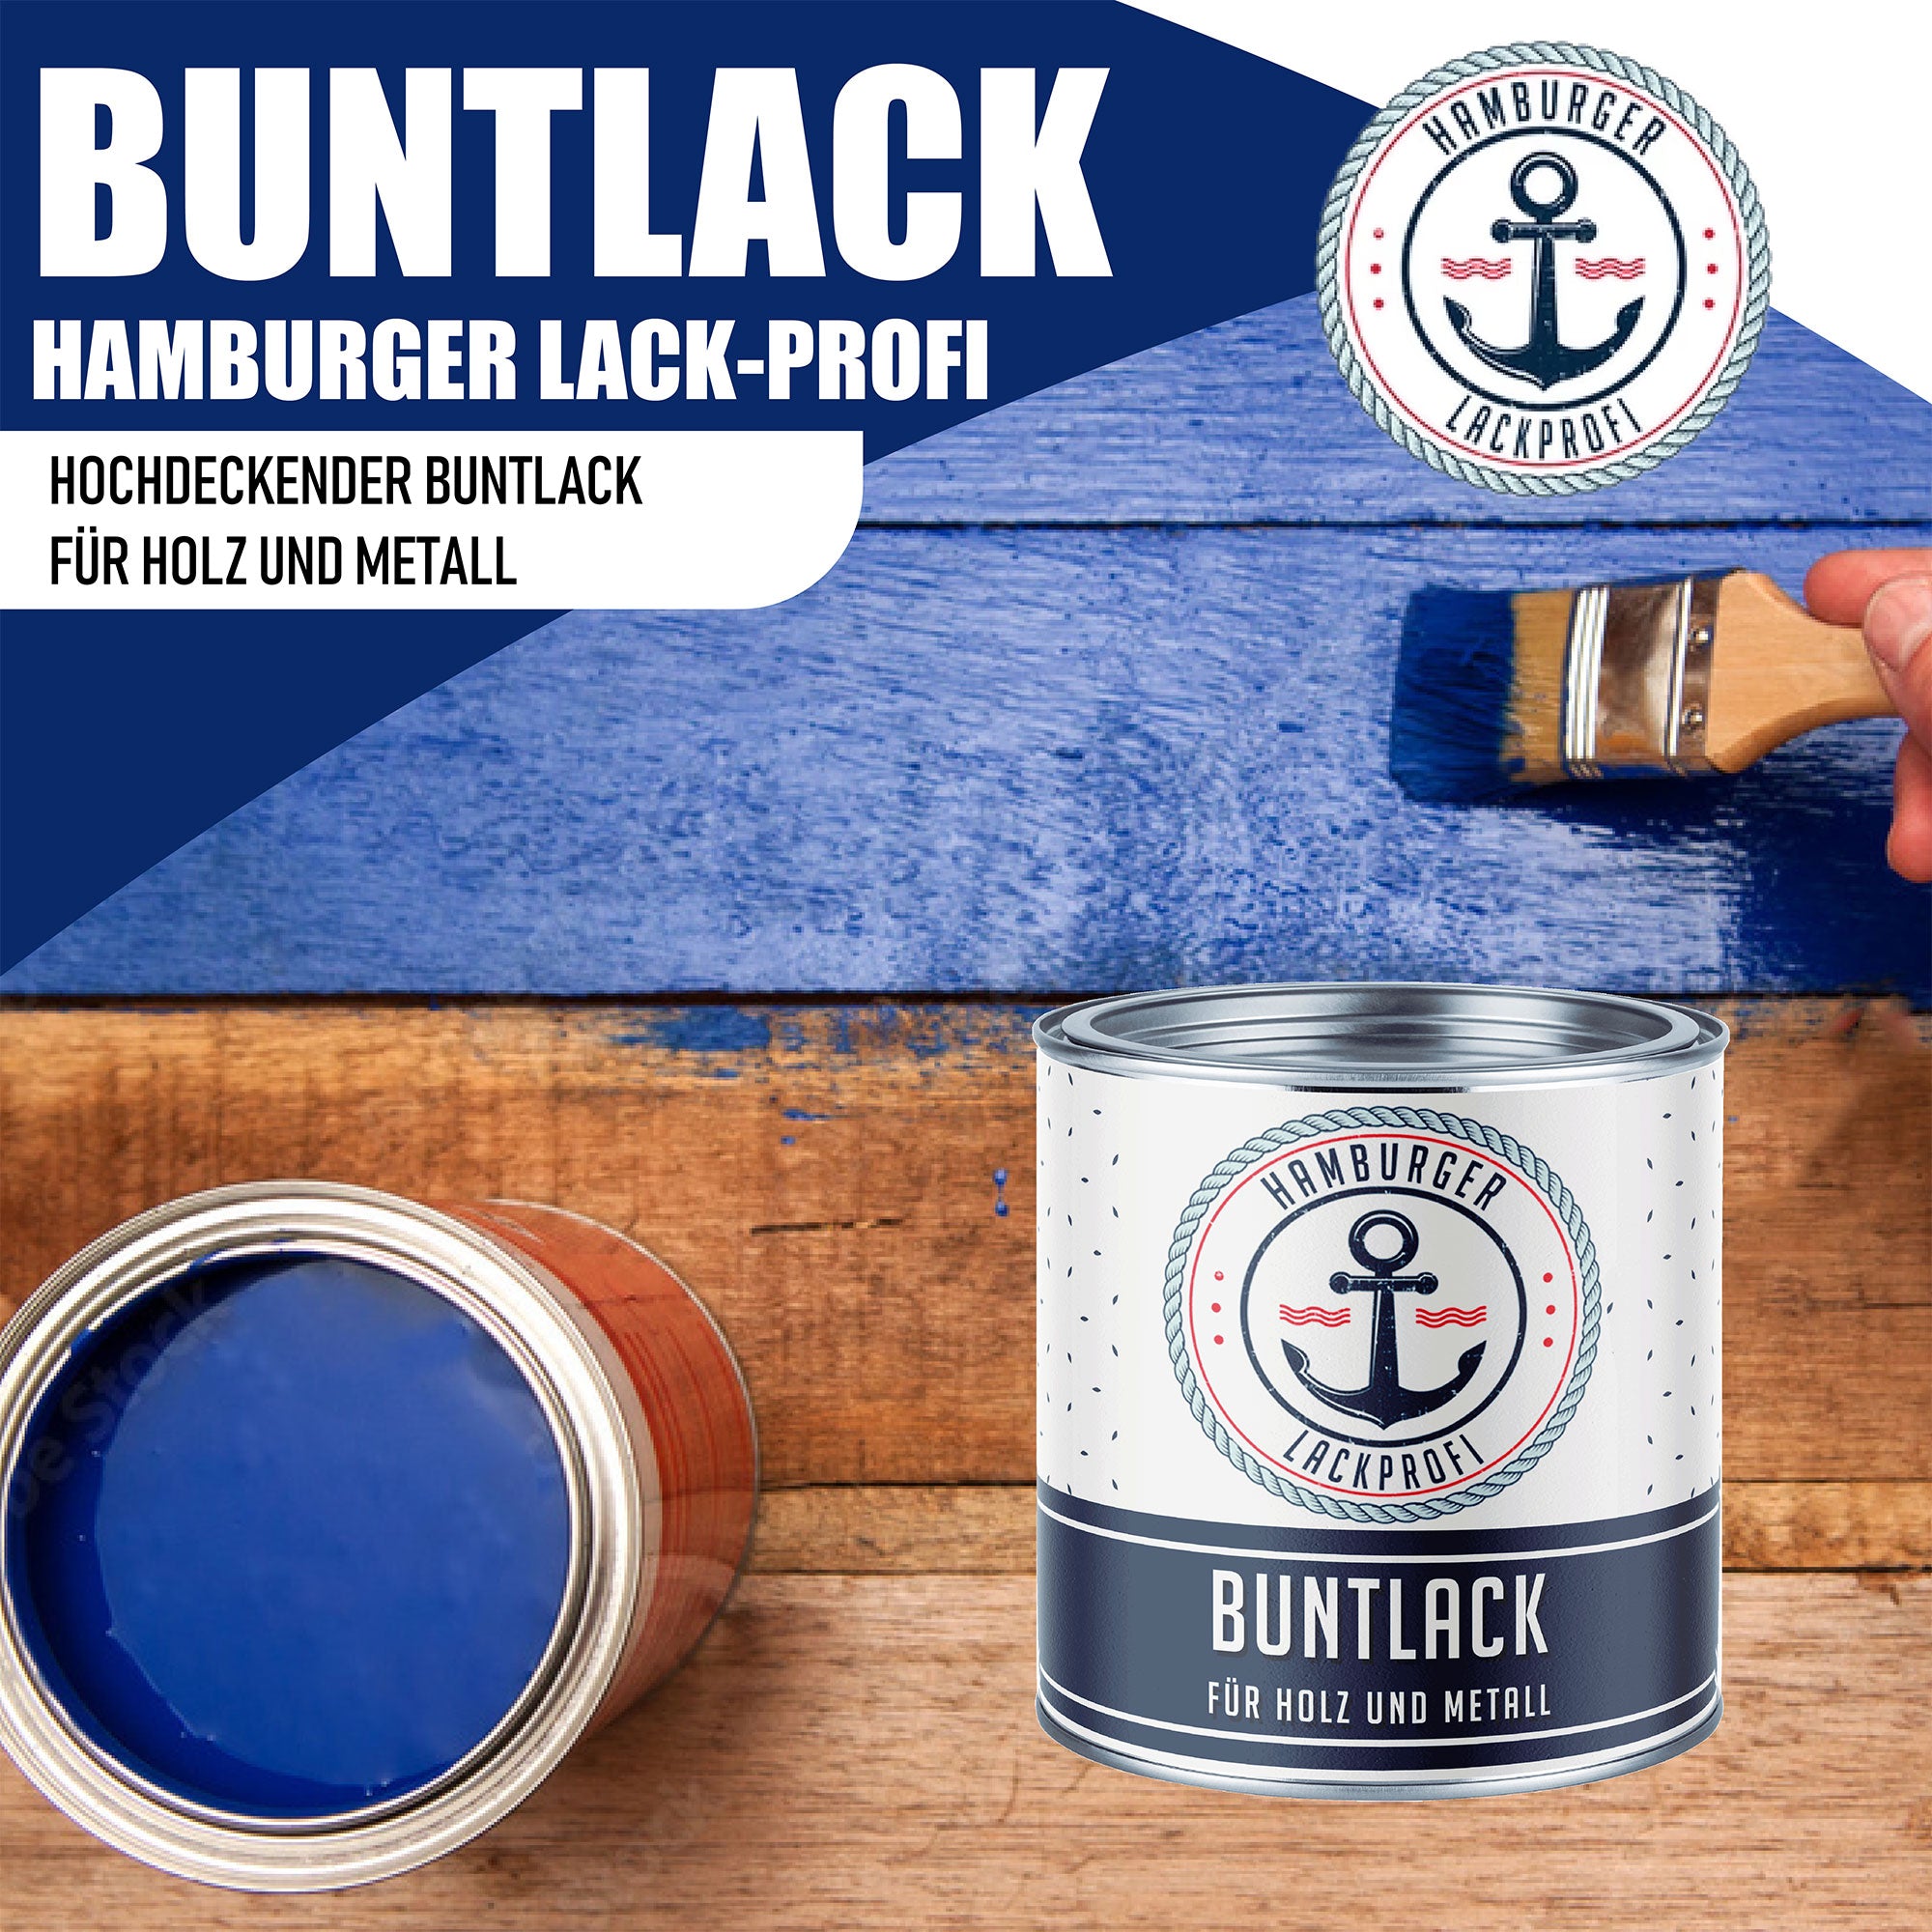 Hamburger Lack-Profi Buntlack Kastanienbraun RAL 8015 - Robuster Kunstharzlack